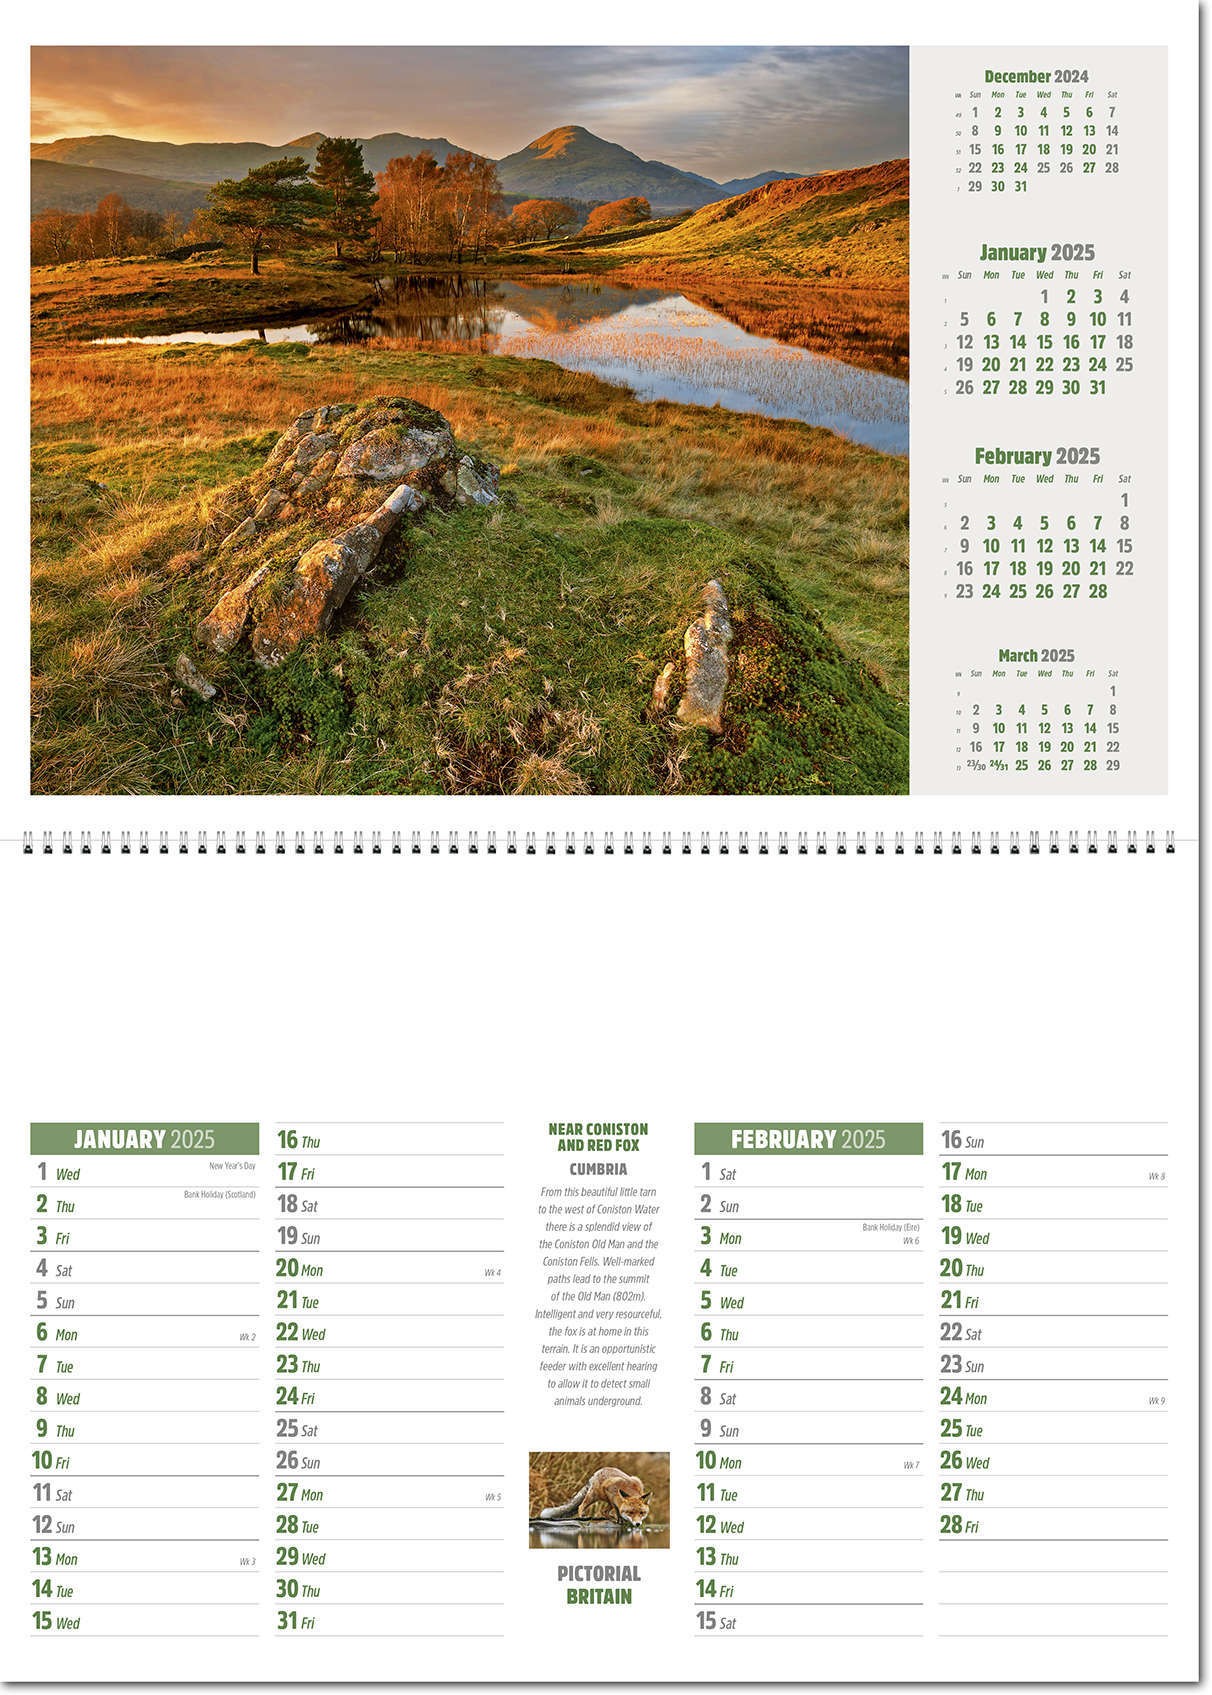 Pictorial Britain Postage Saver Calendar